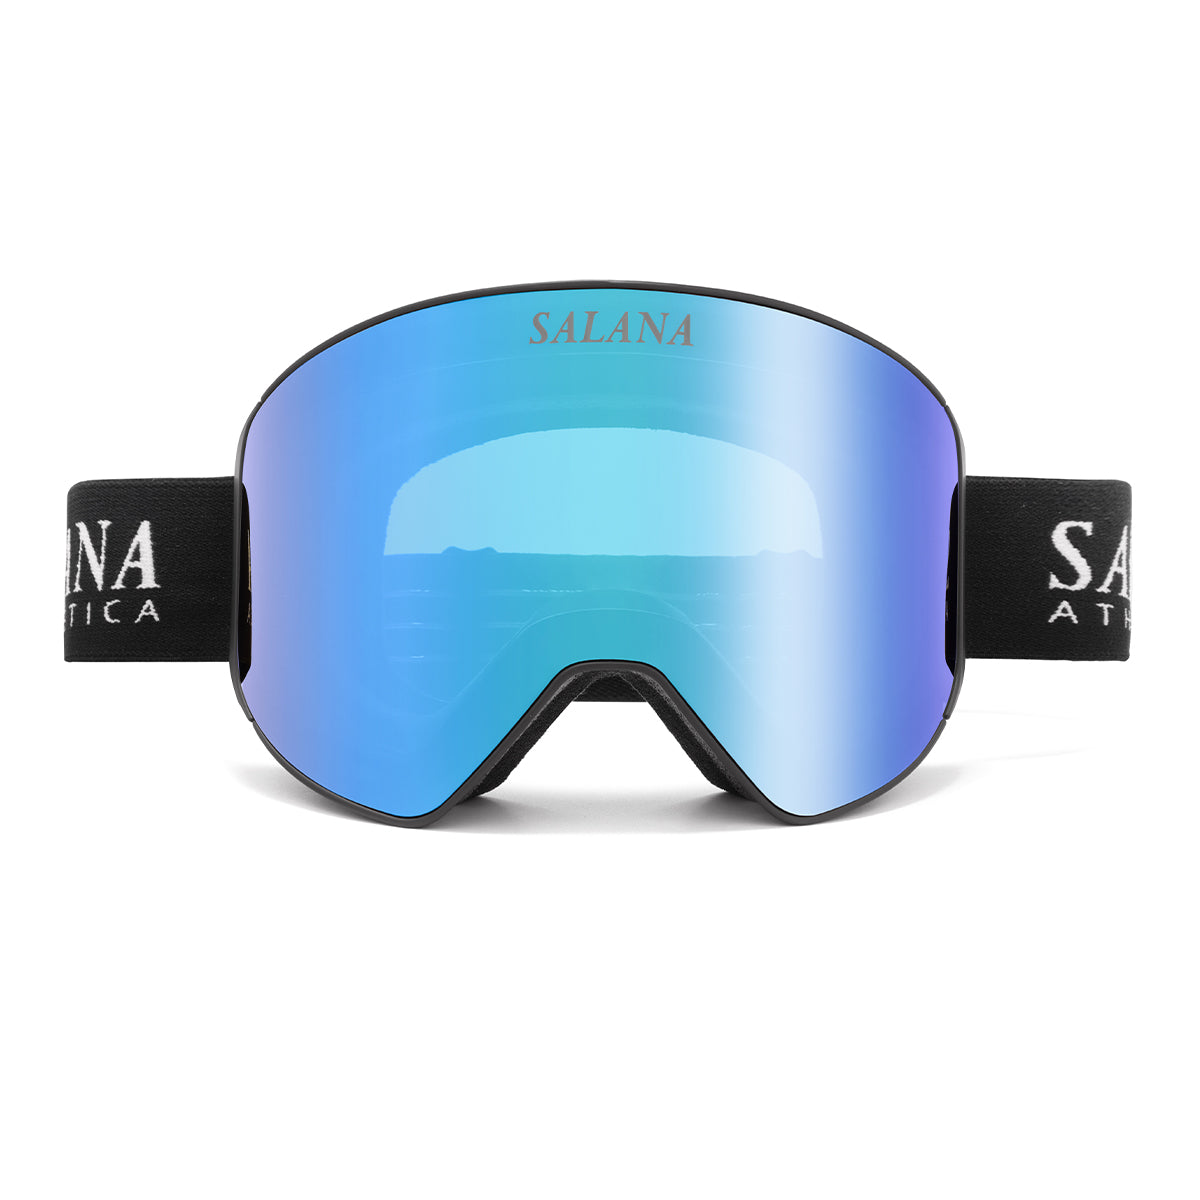 Salana ski snowboard goggles - mirror tint blue